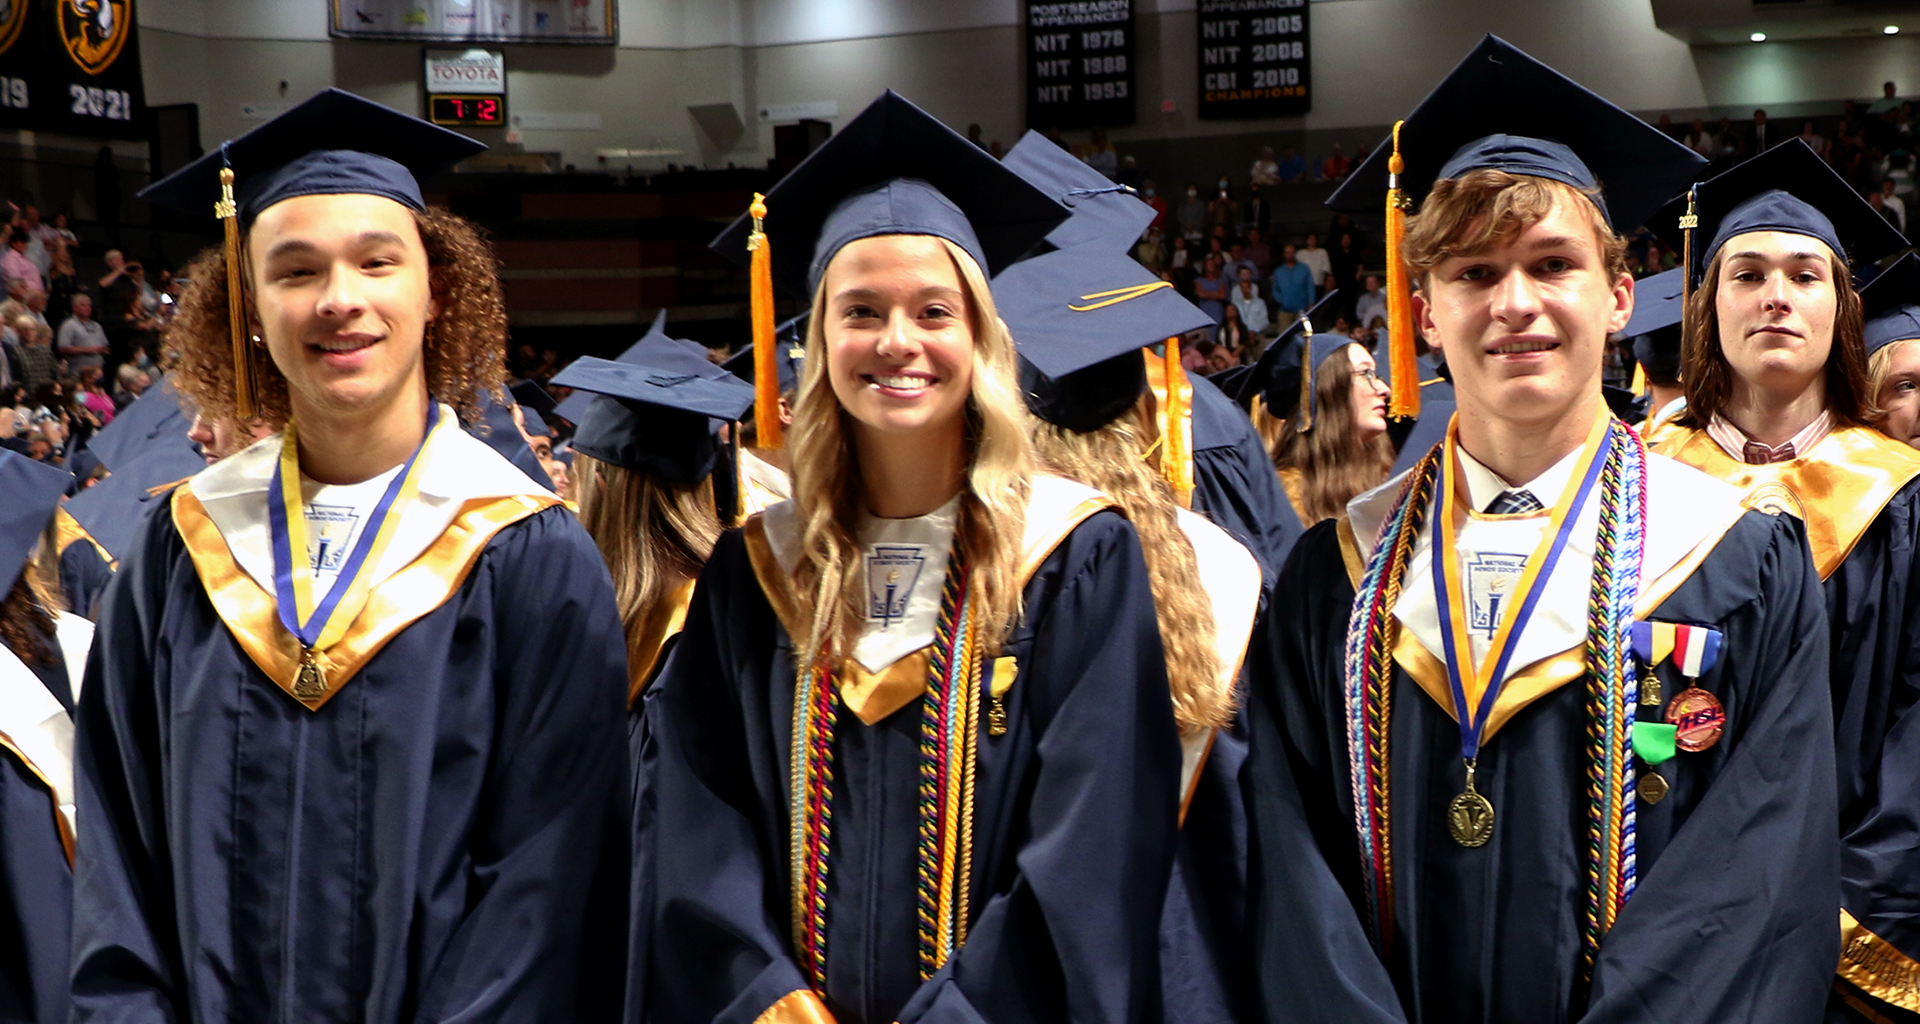 Three high school students during their graduation